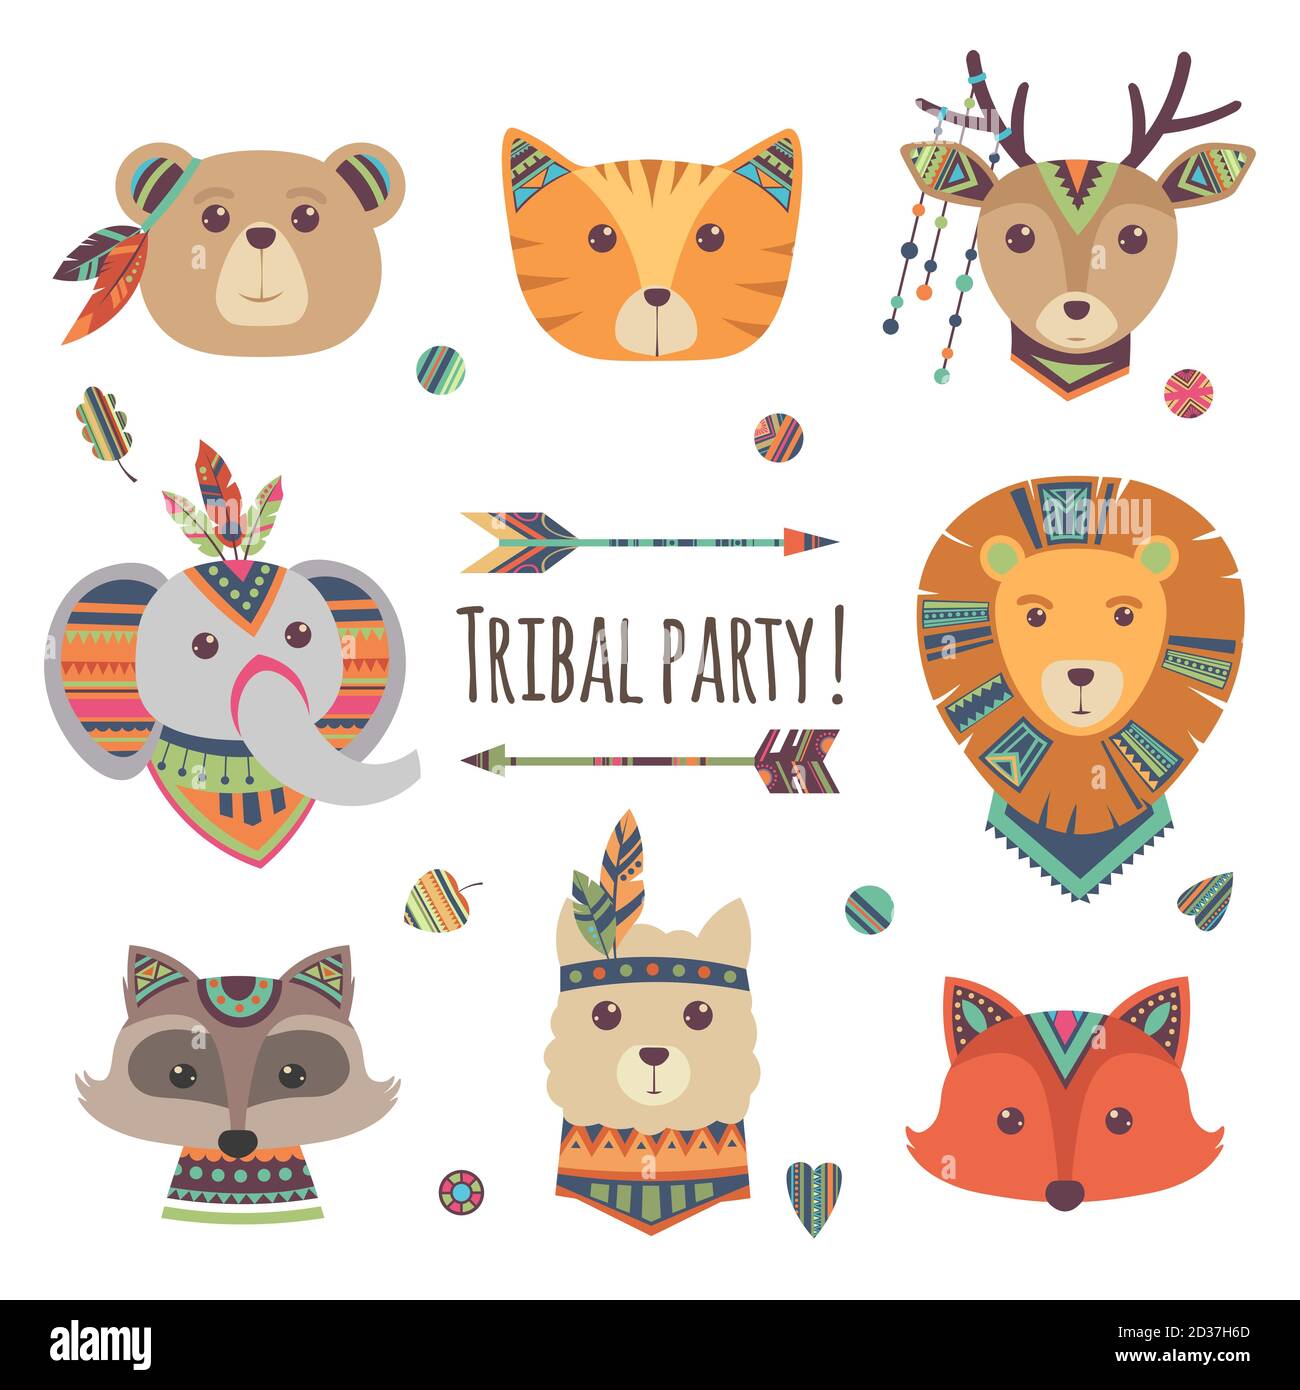 Cartoon tribal animal heads isolated on white background. Vector lama, bear, elephant, raccoon, fox, cat ethnic style illustration Stock Vector